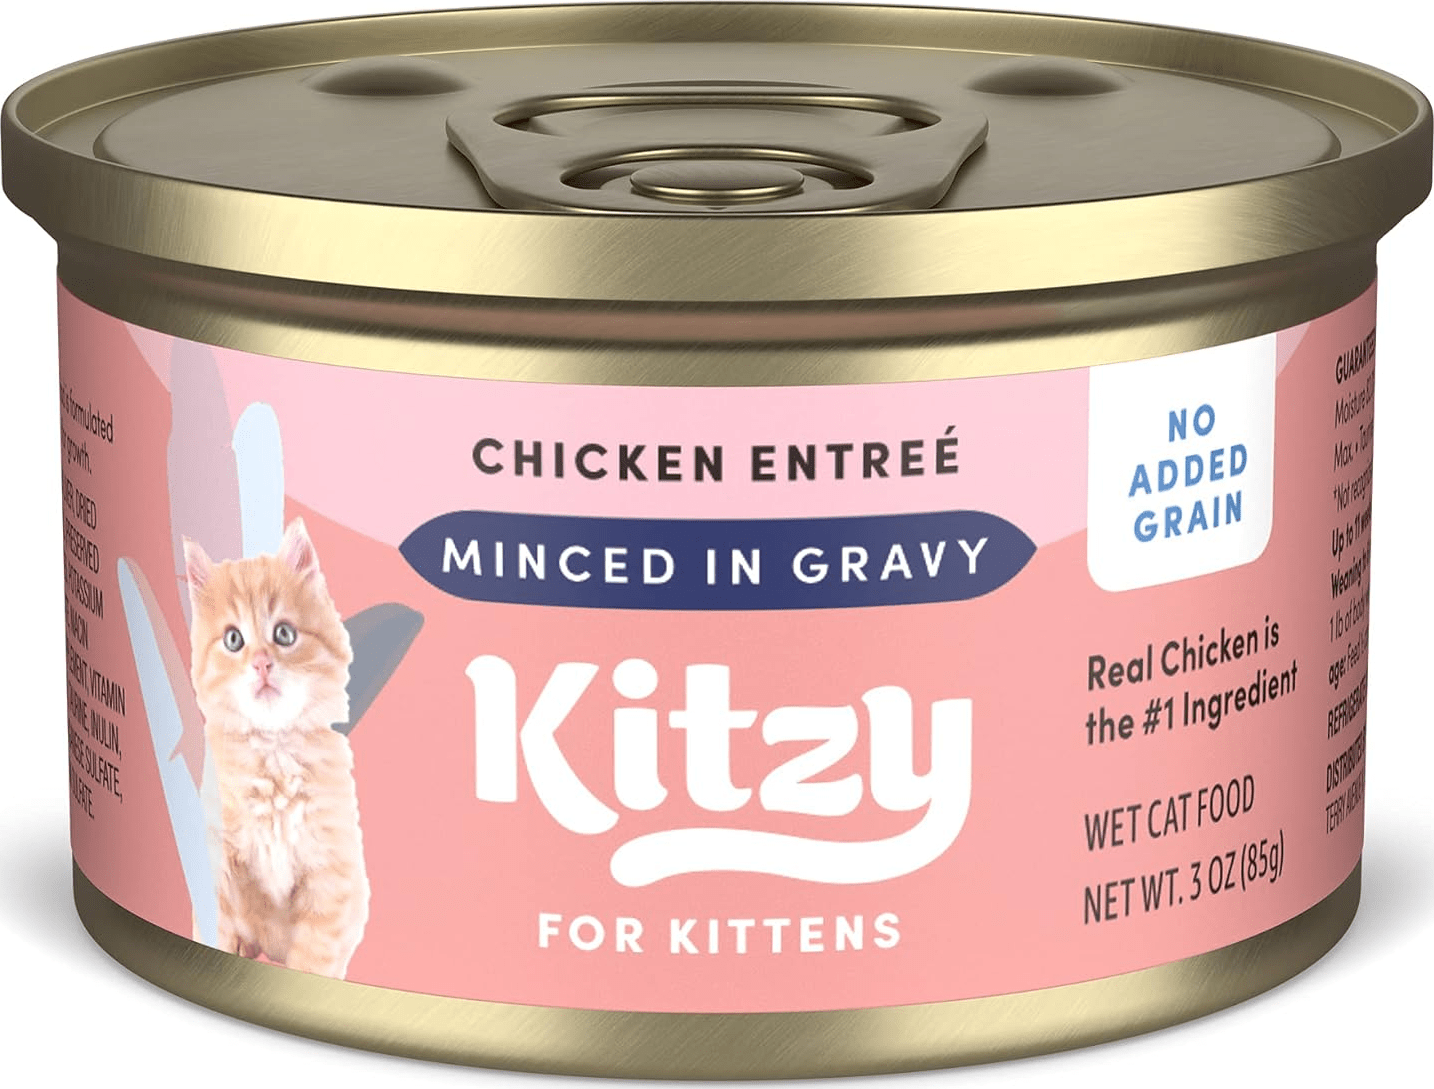 Kitzy Kitten Chicken Entree